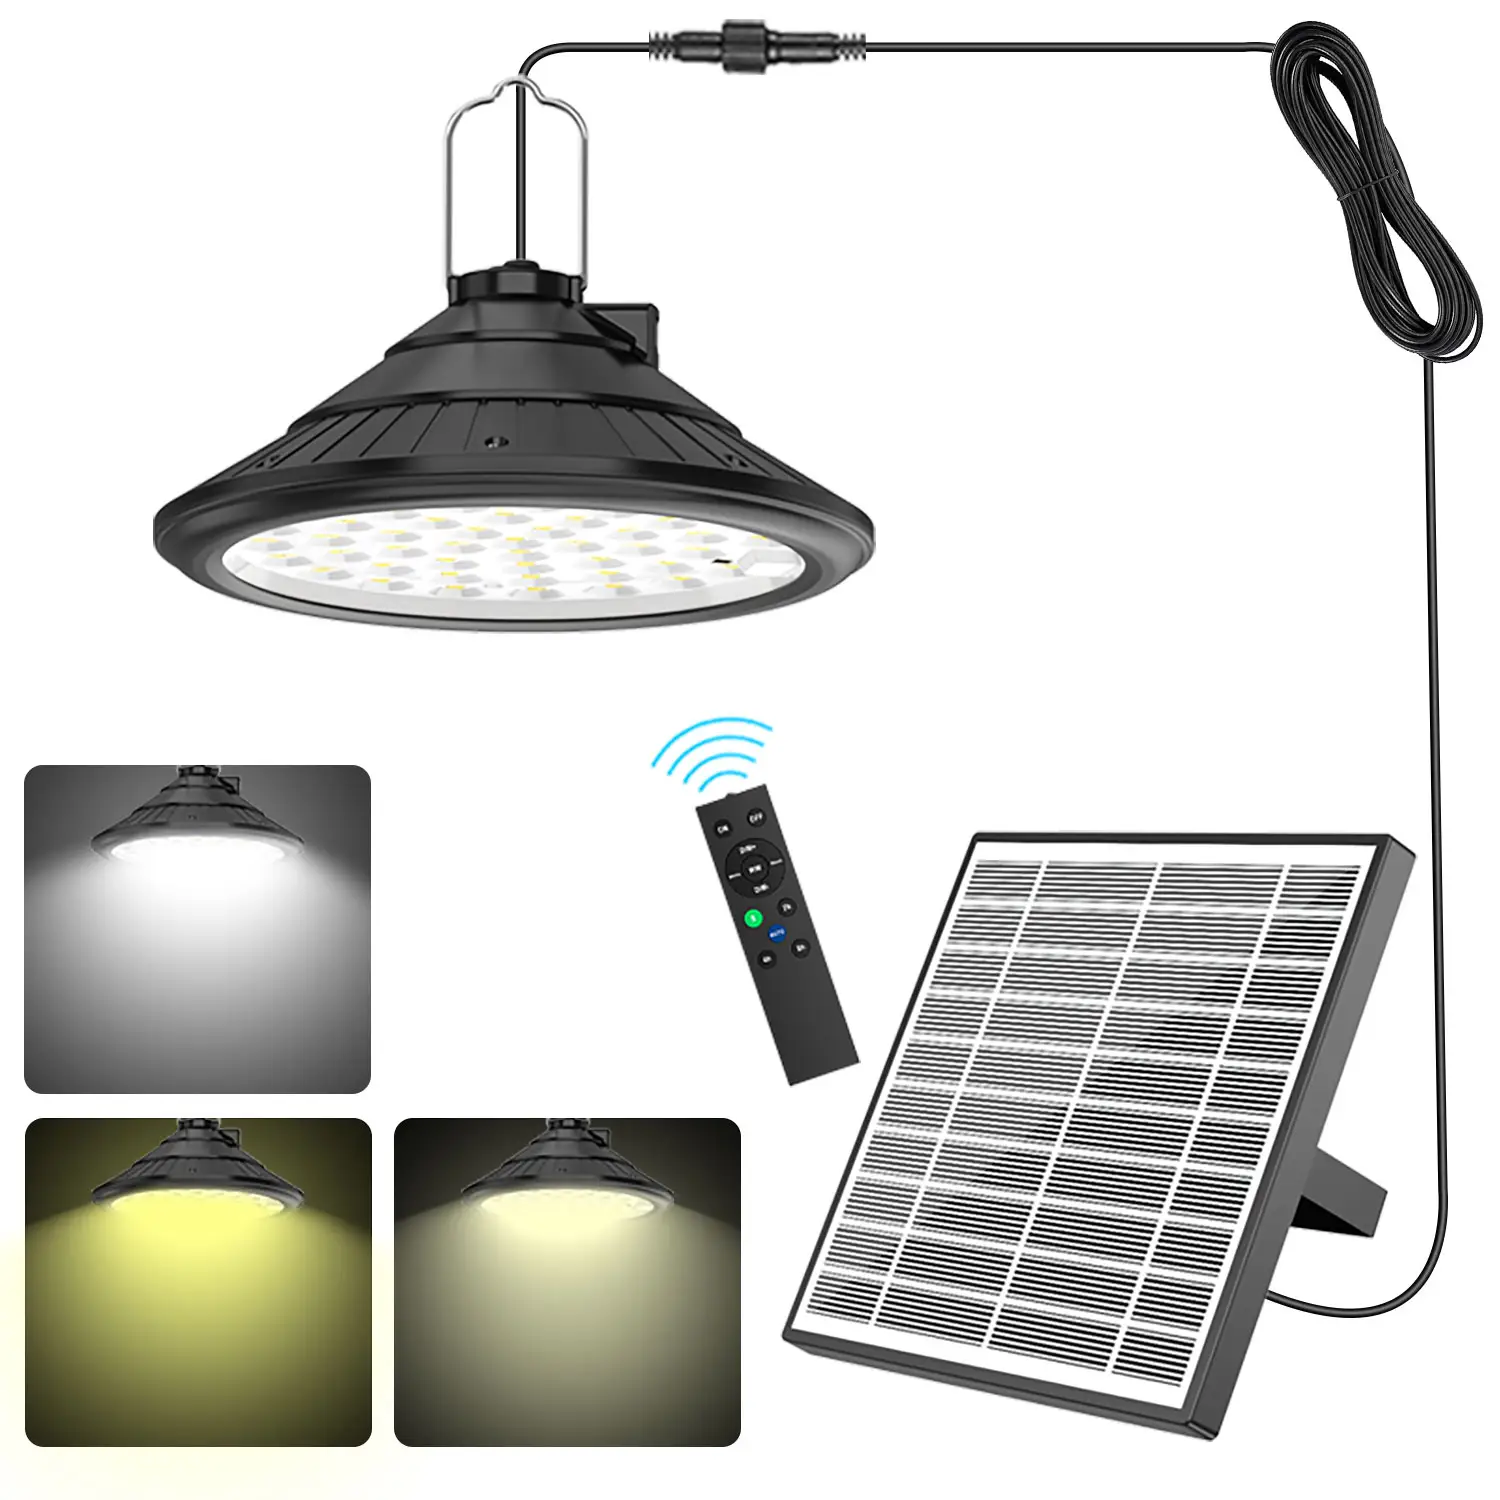 Solar branches chandelier remote control can adjust waterproof IP66 light -shot light garden light garage garage shed